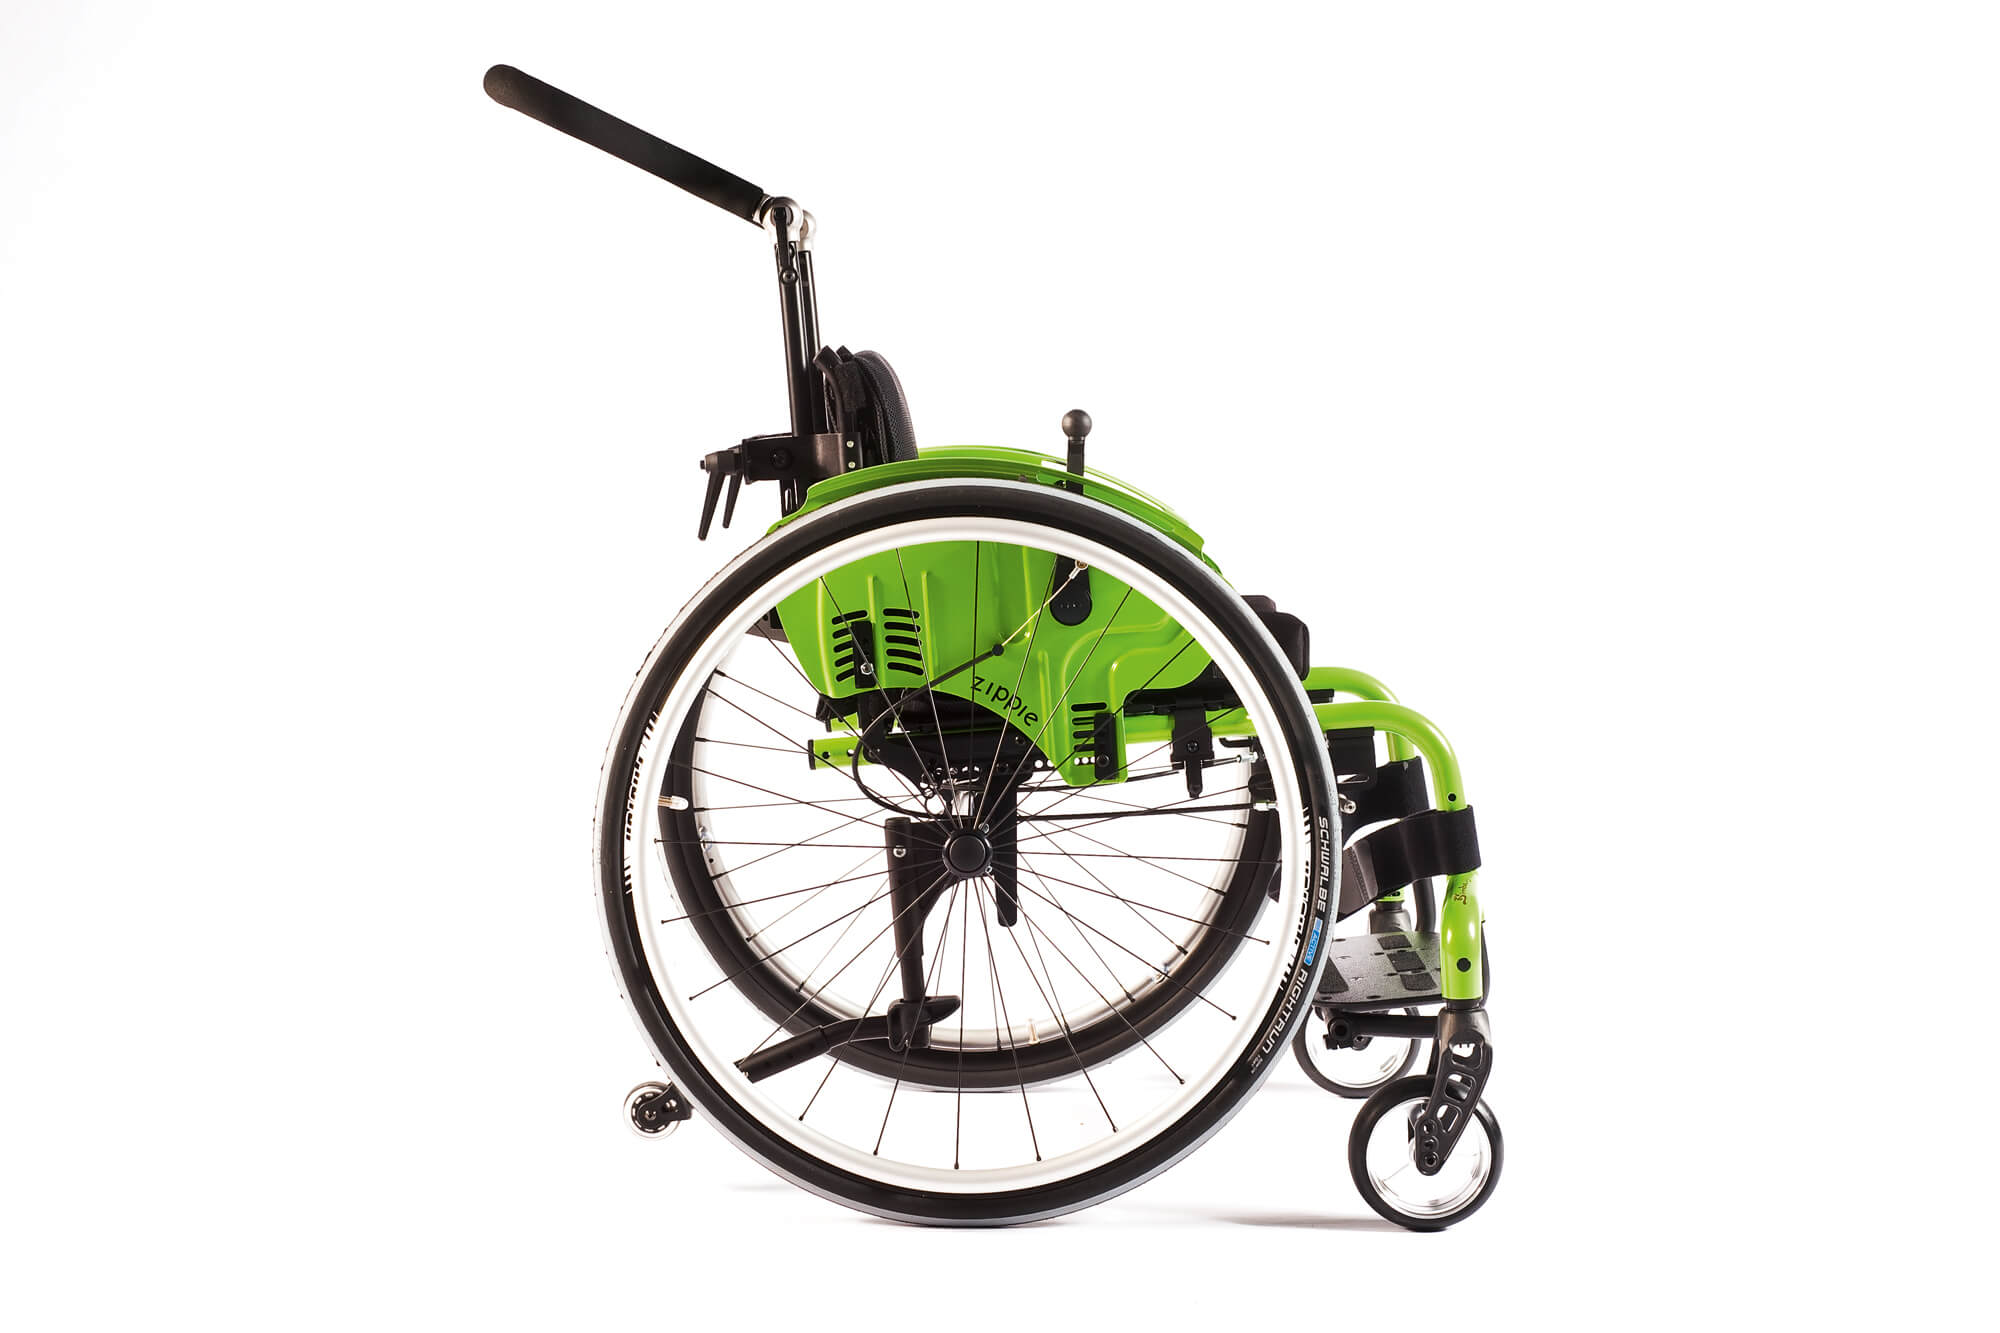 Zippie Simba Rigid Wheelchair